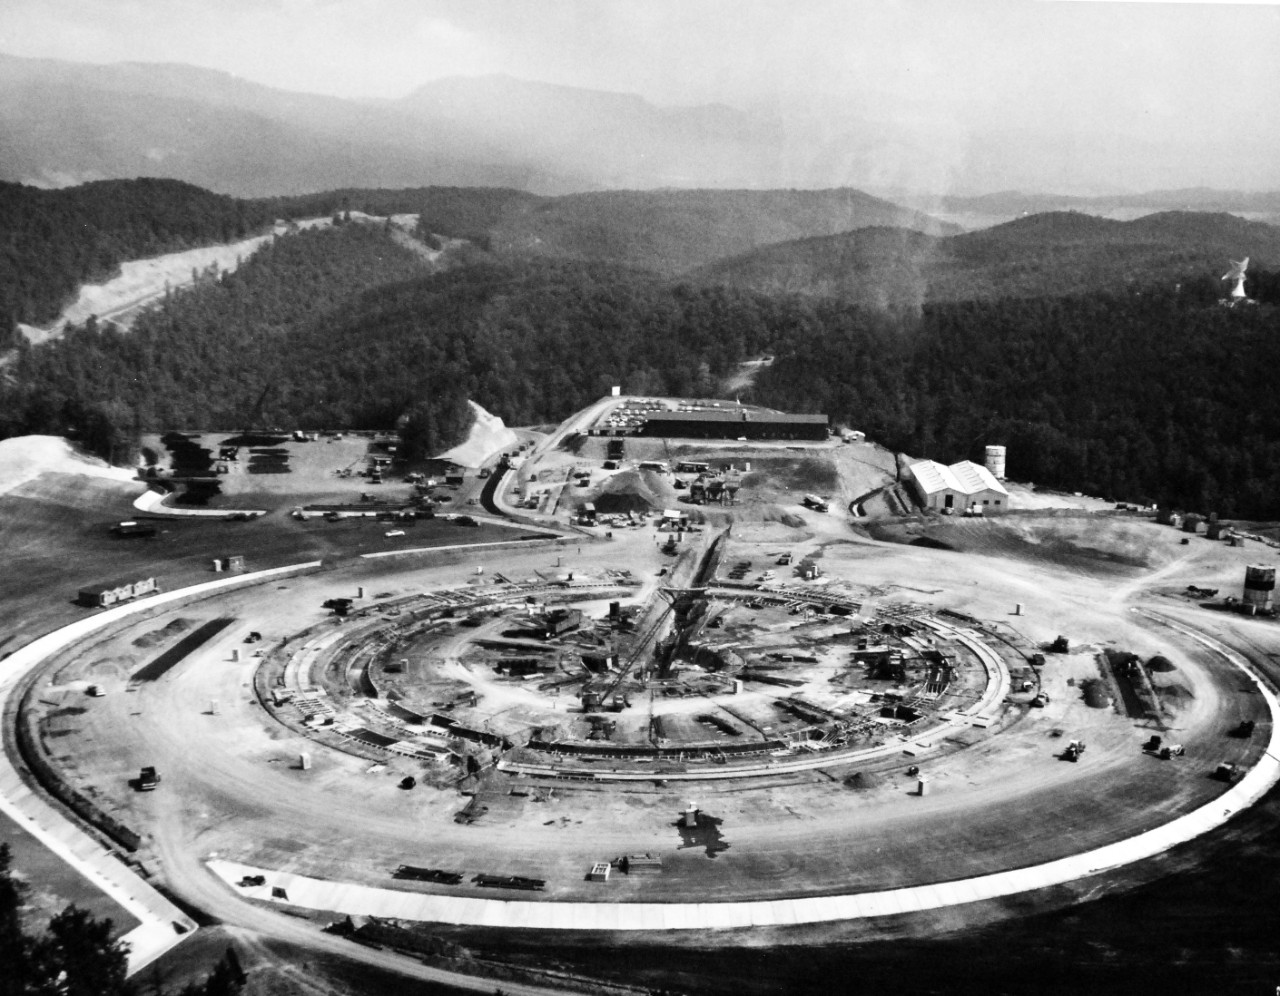 Construction on the Gigantic Radio Telescope at Sugar Grove, West Virginia, September 1959